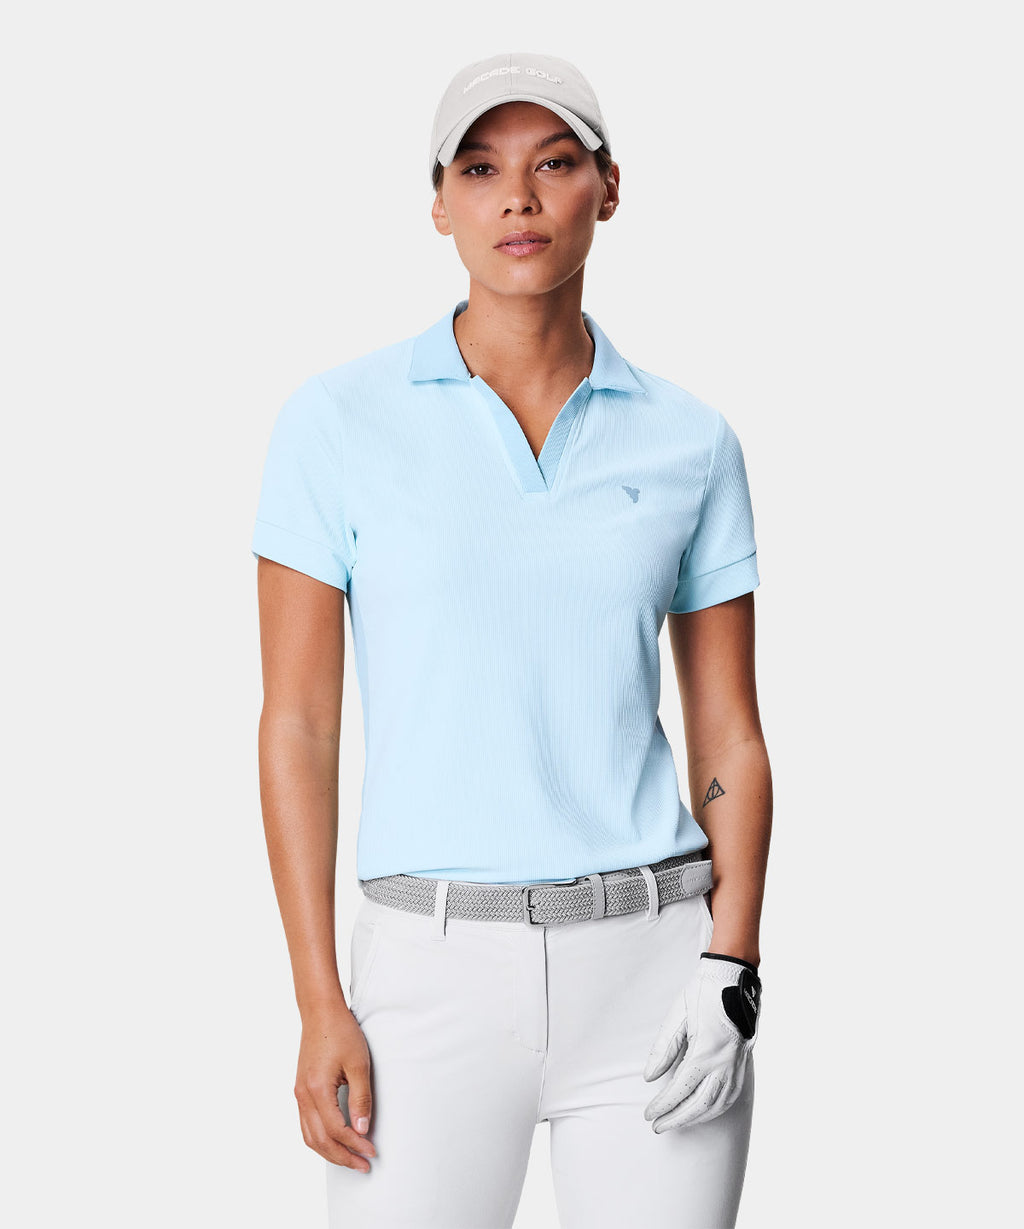 Tori Light Blue Polo Shirt Macade Golf